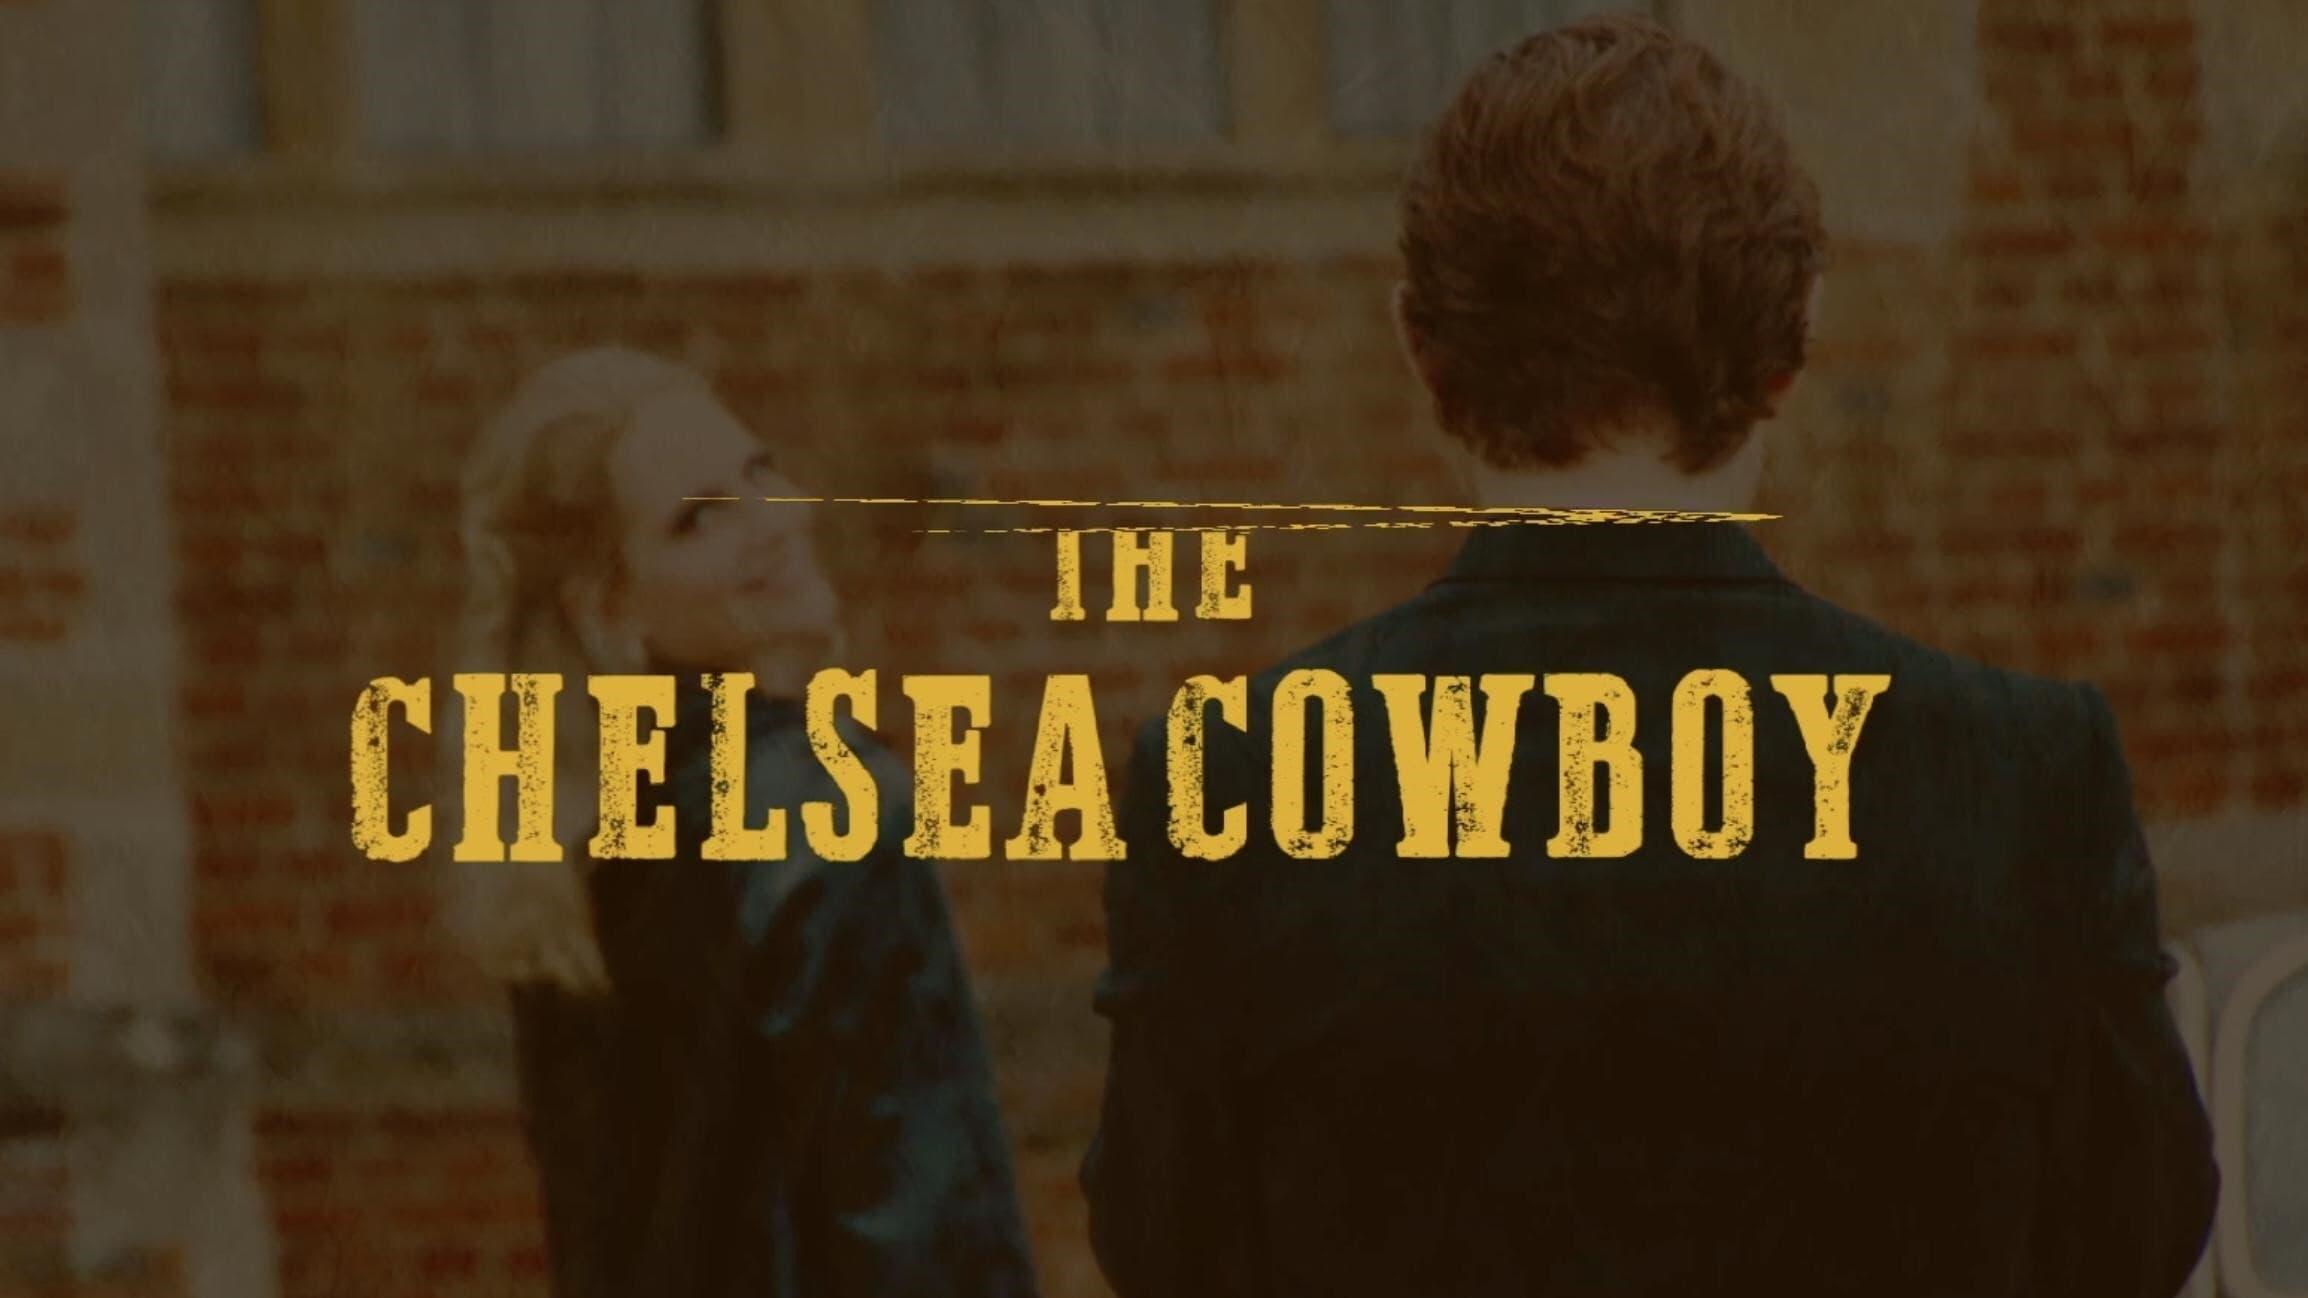 The Chelsea Cowboy backdrop